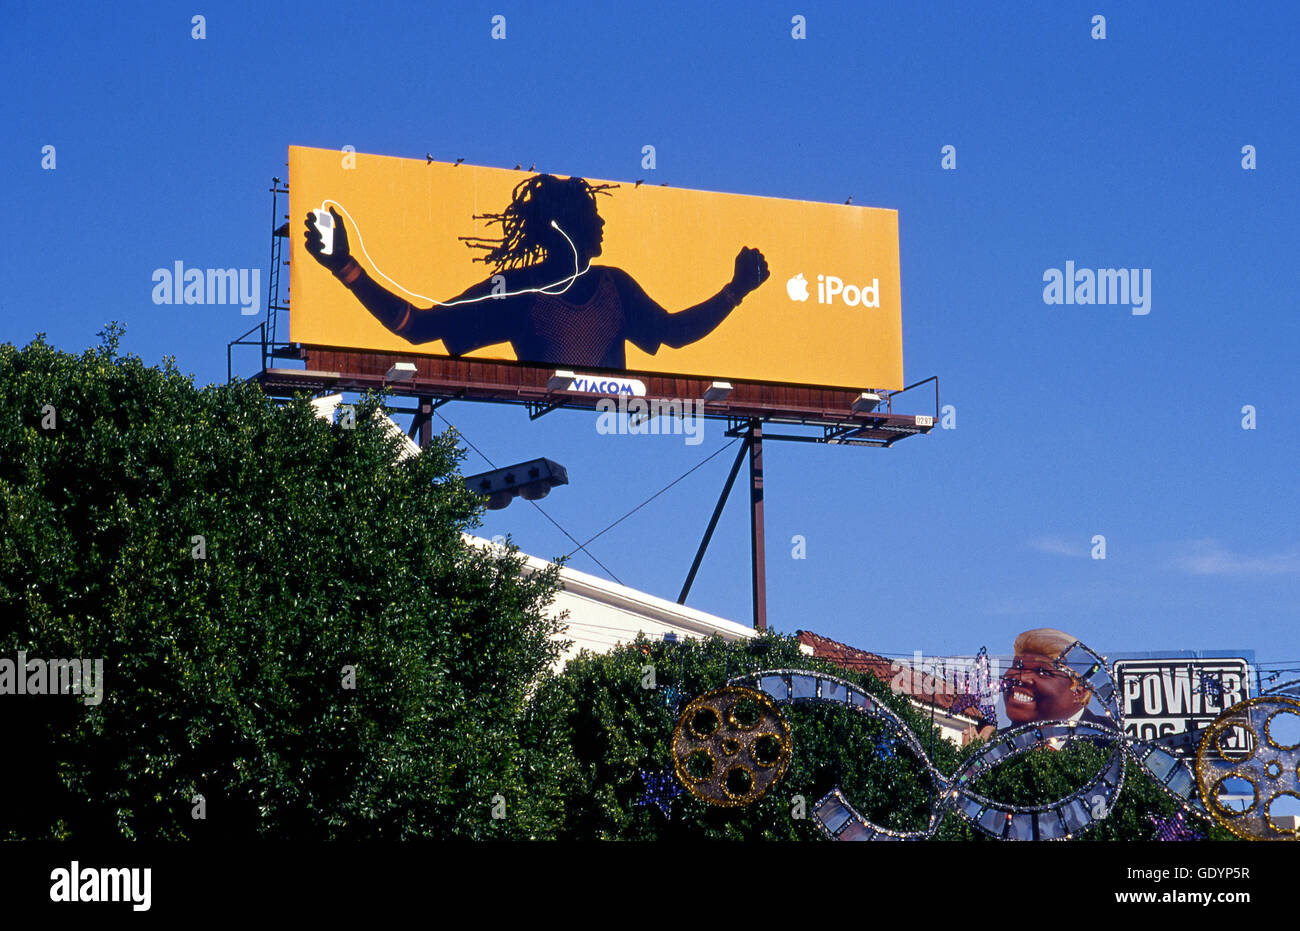 IPOD billboard in Los Angeles, CA circa 2004 Stock Photo